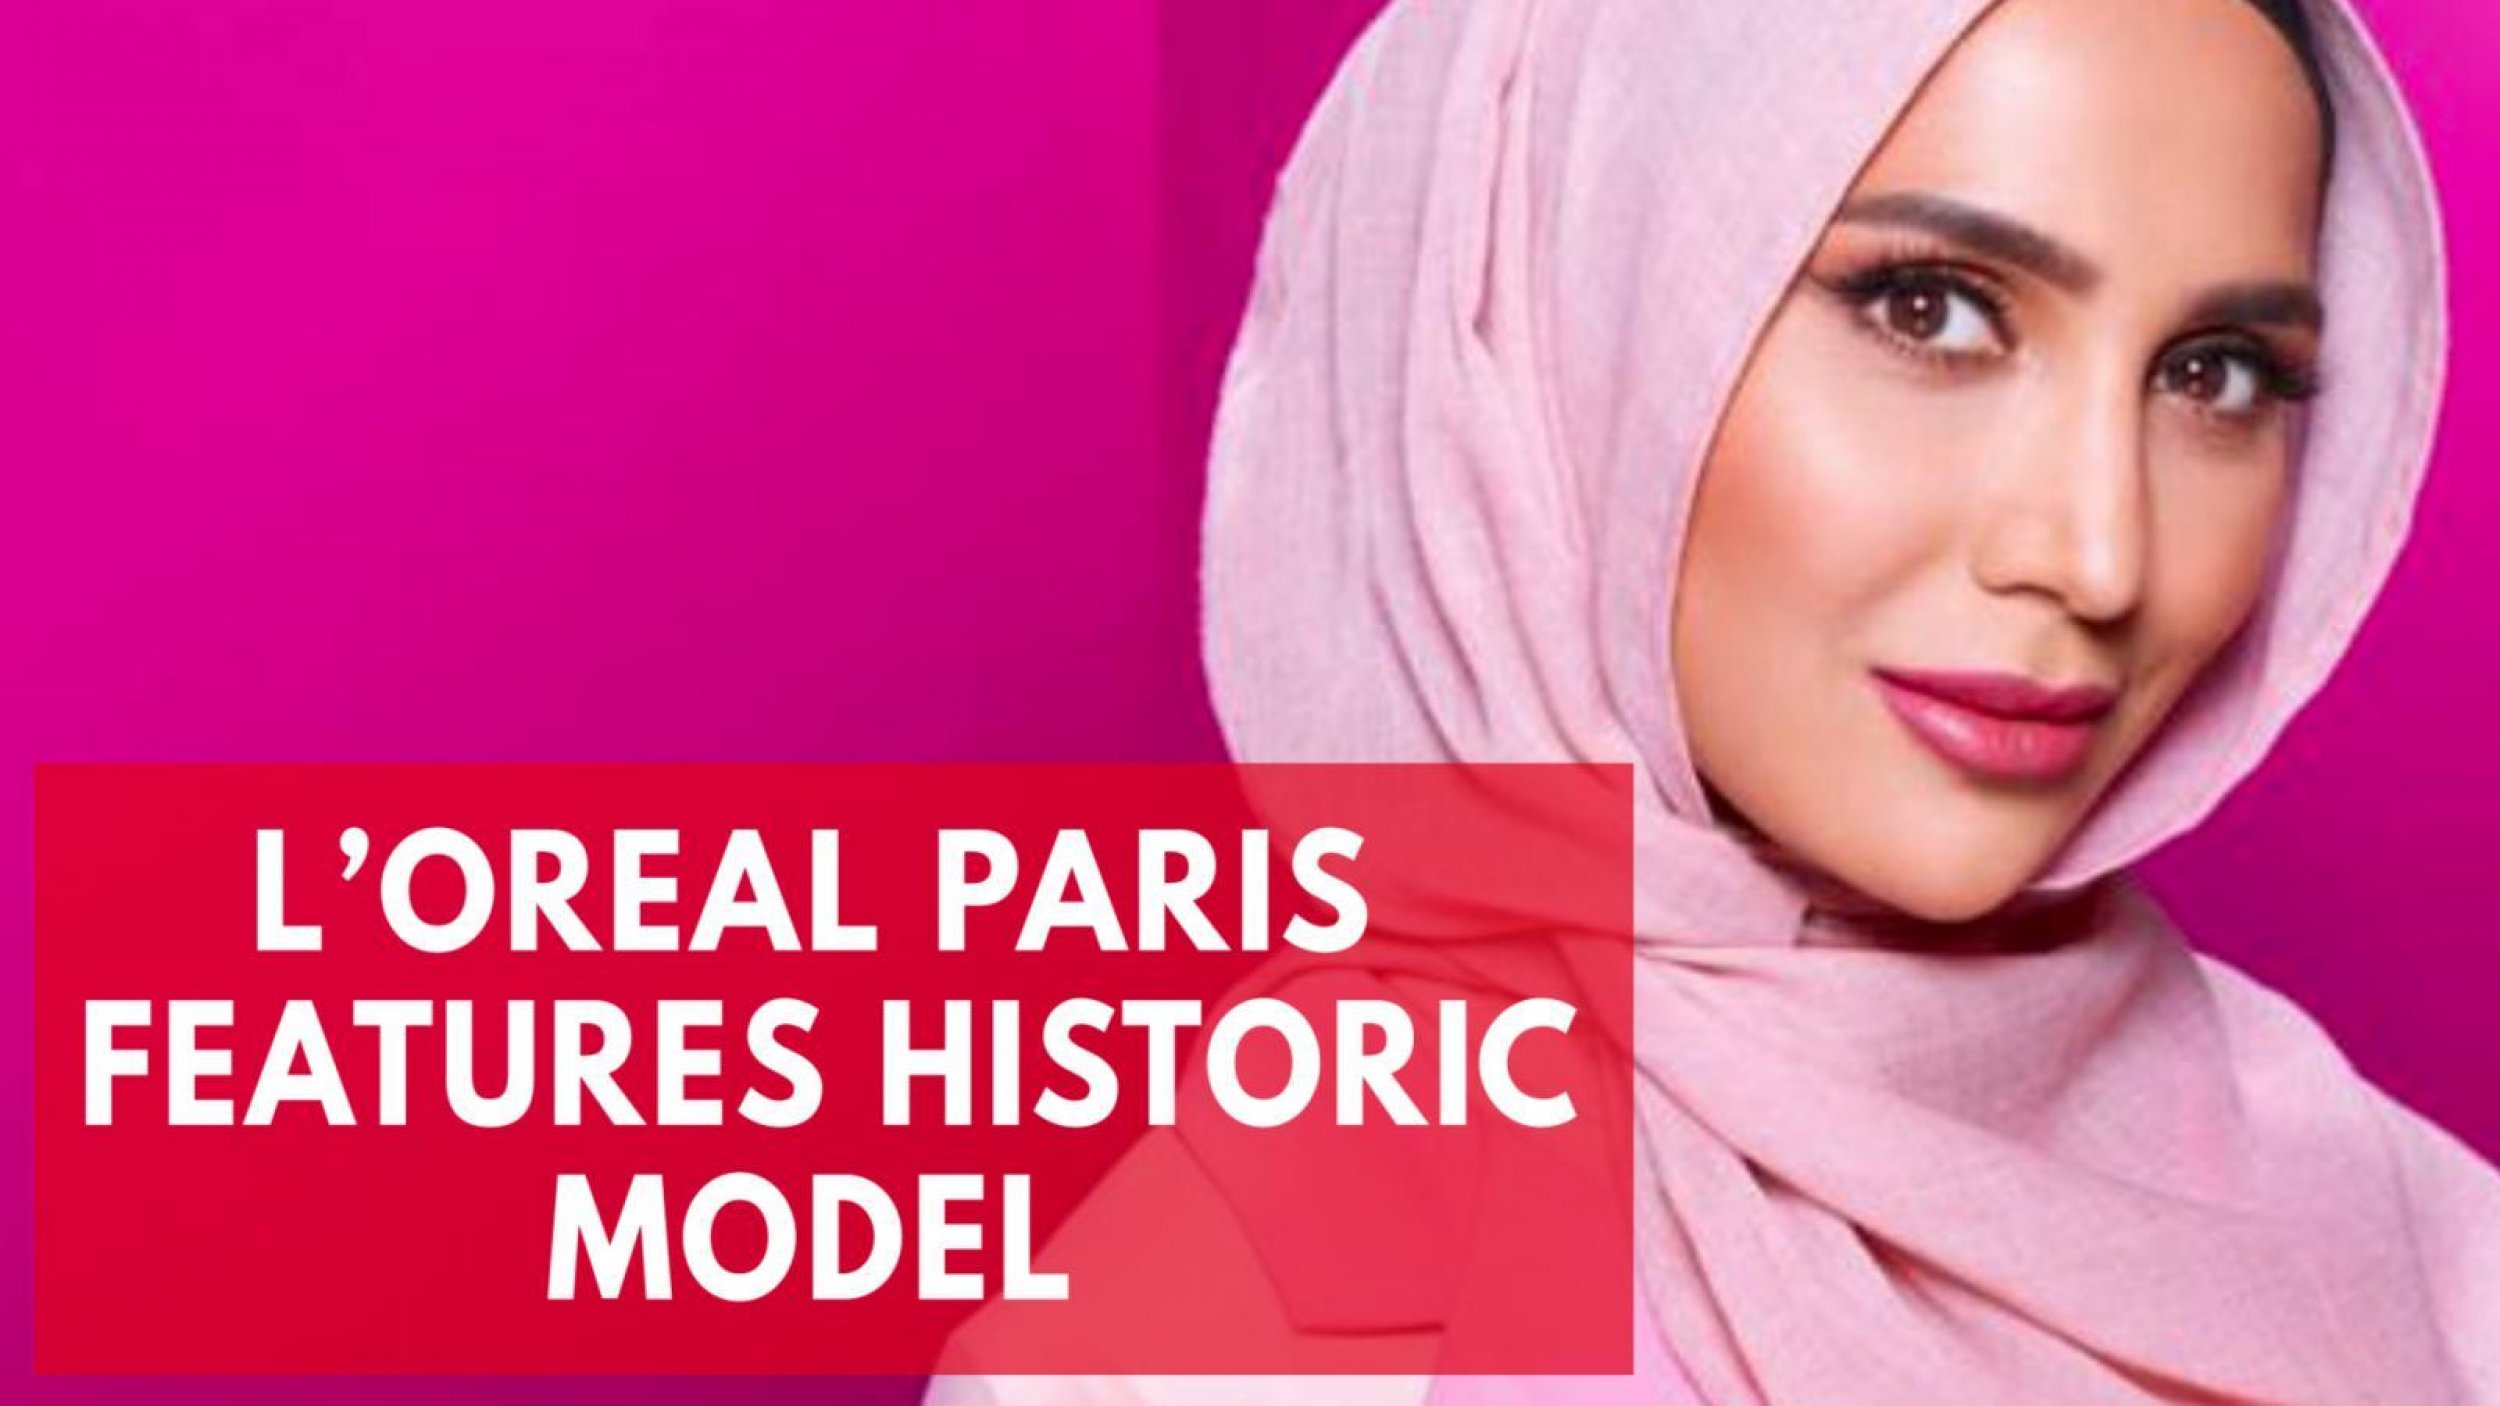 Hijab-wearing Model Fronts LOreal Paris Hair Campaign